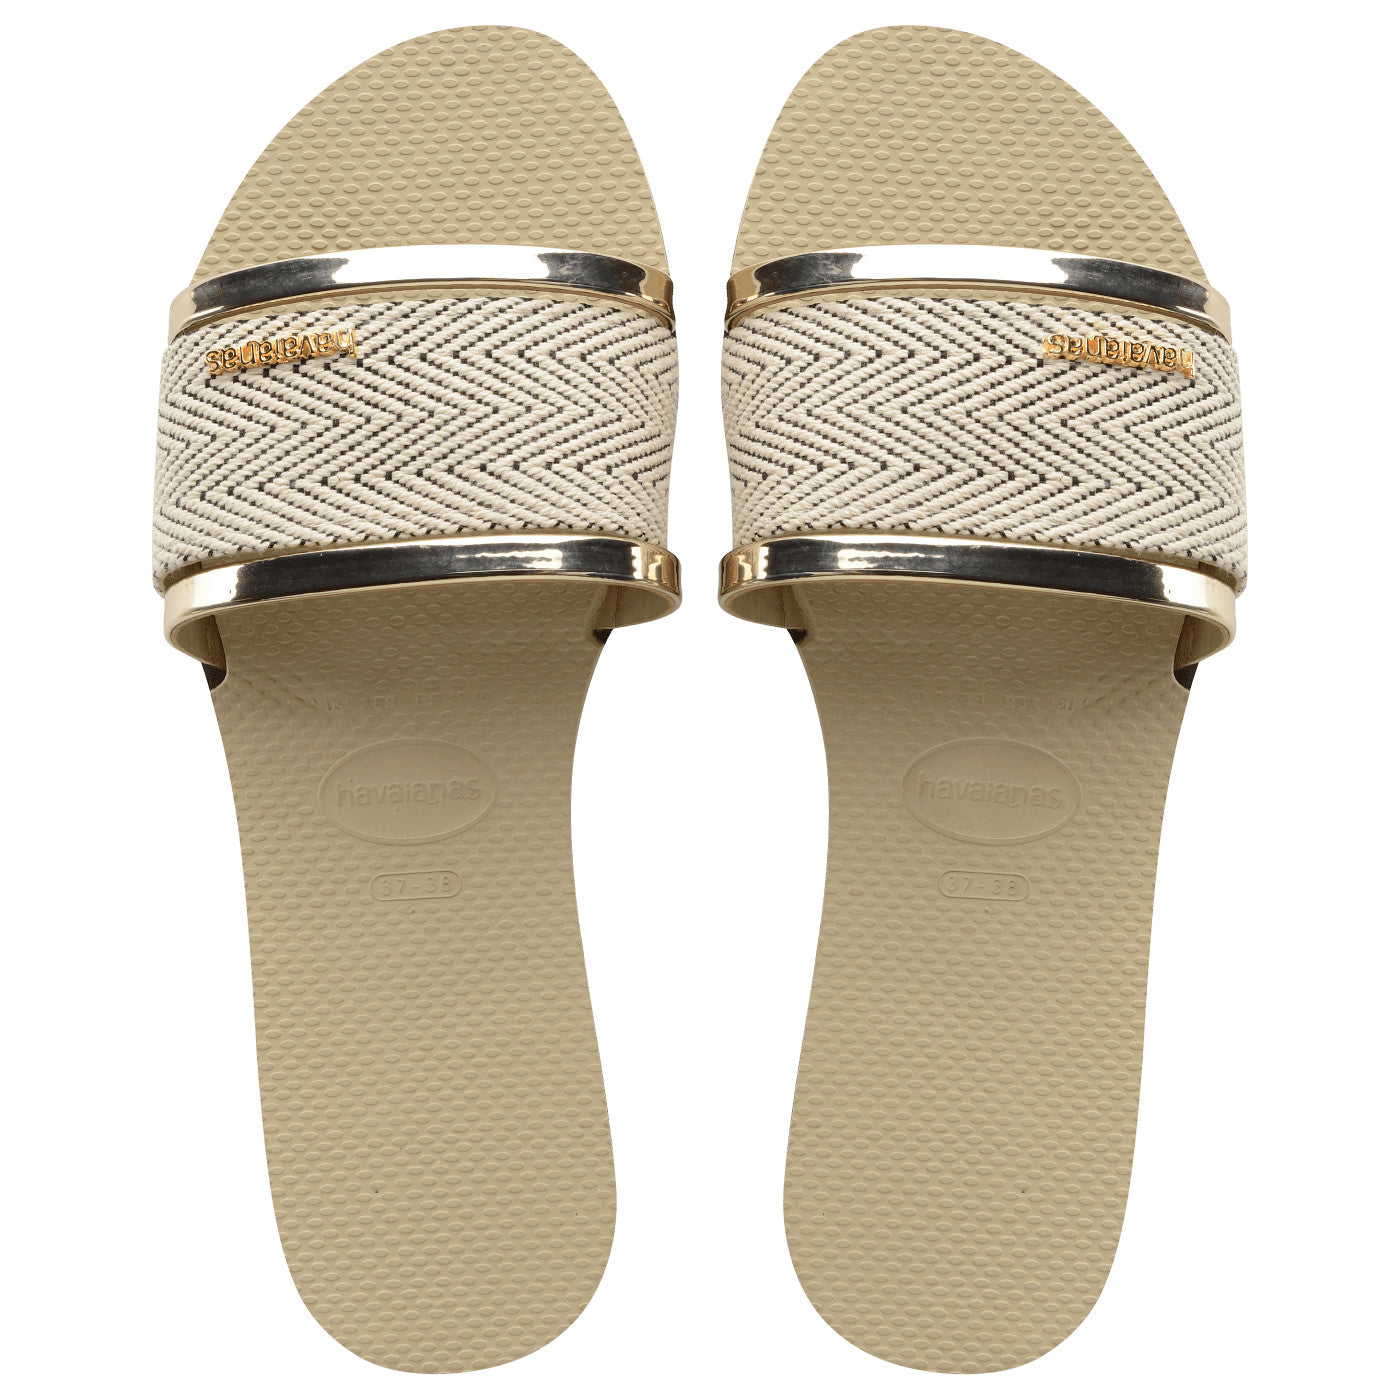 Havaianas You Trancoso Premium Womens Sandal 0154-Sand Grey 6